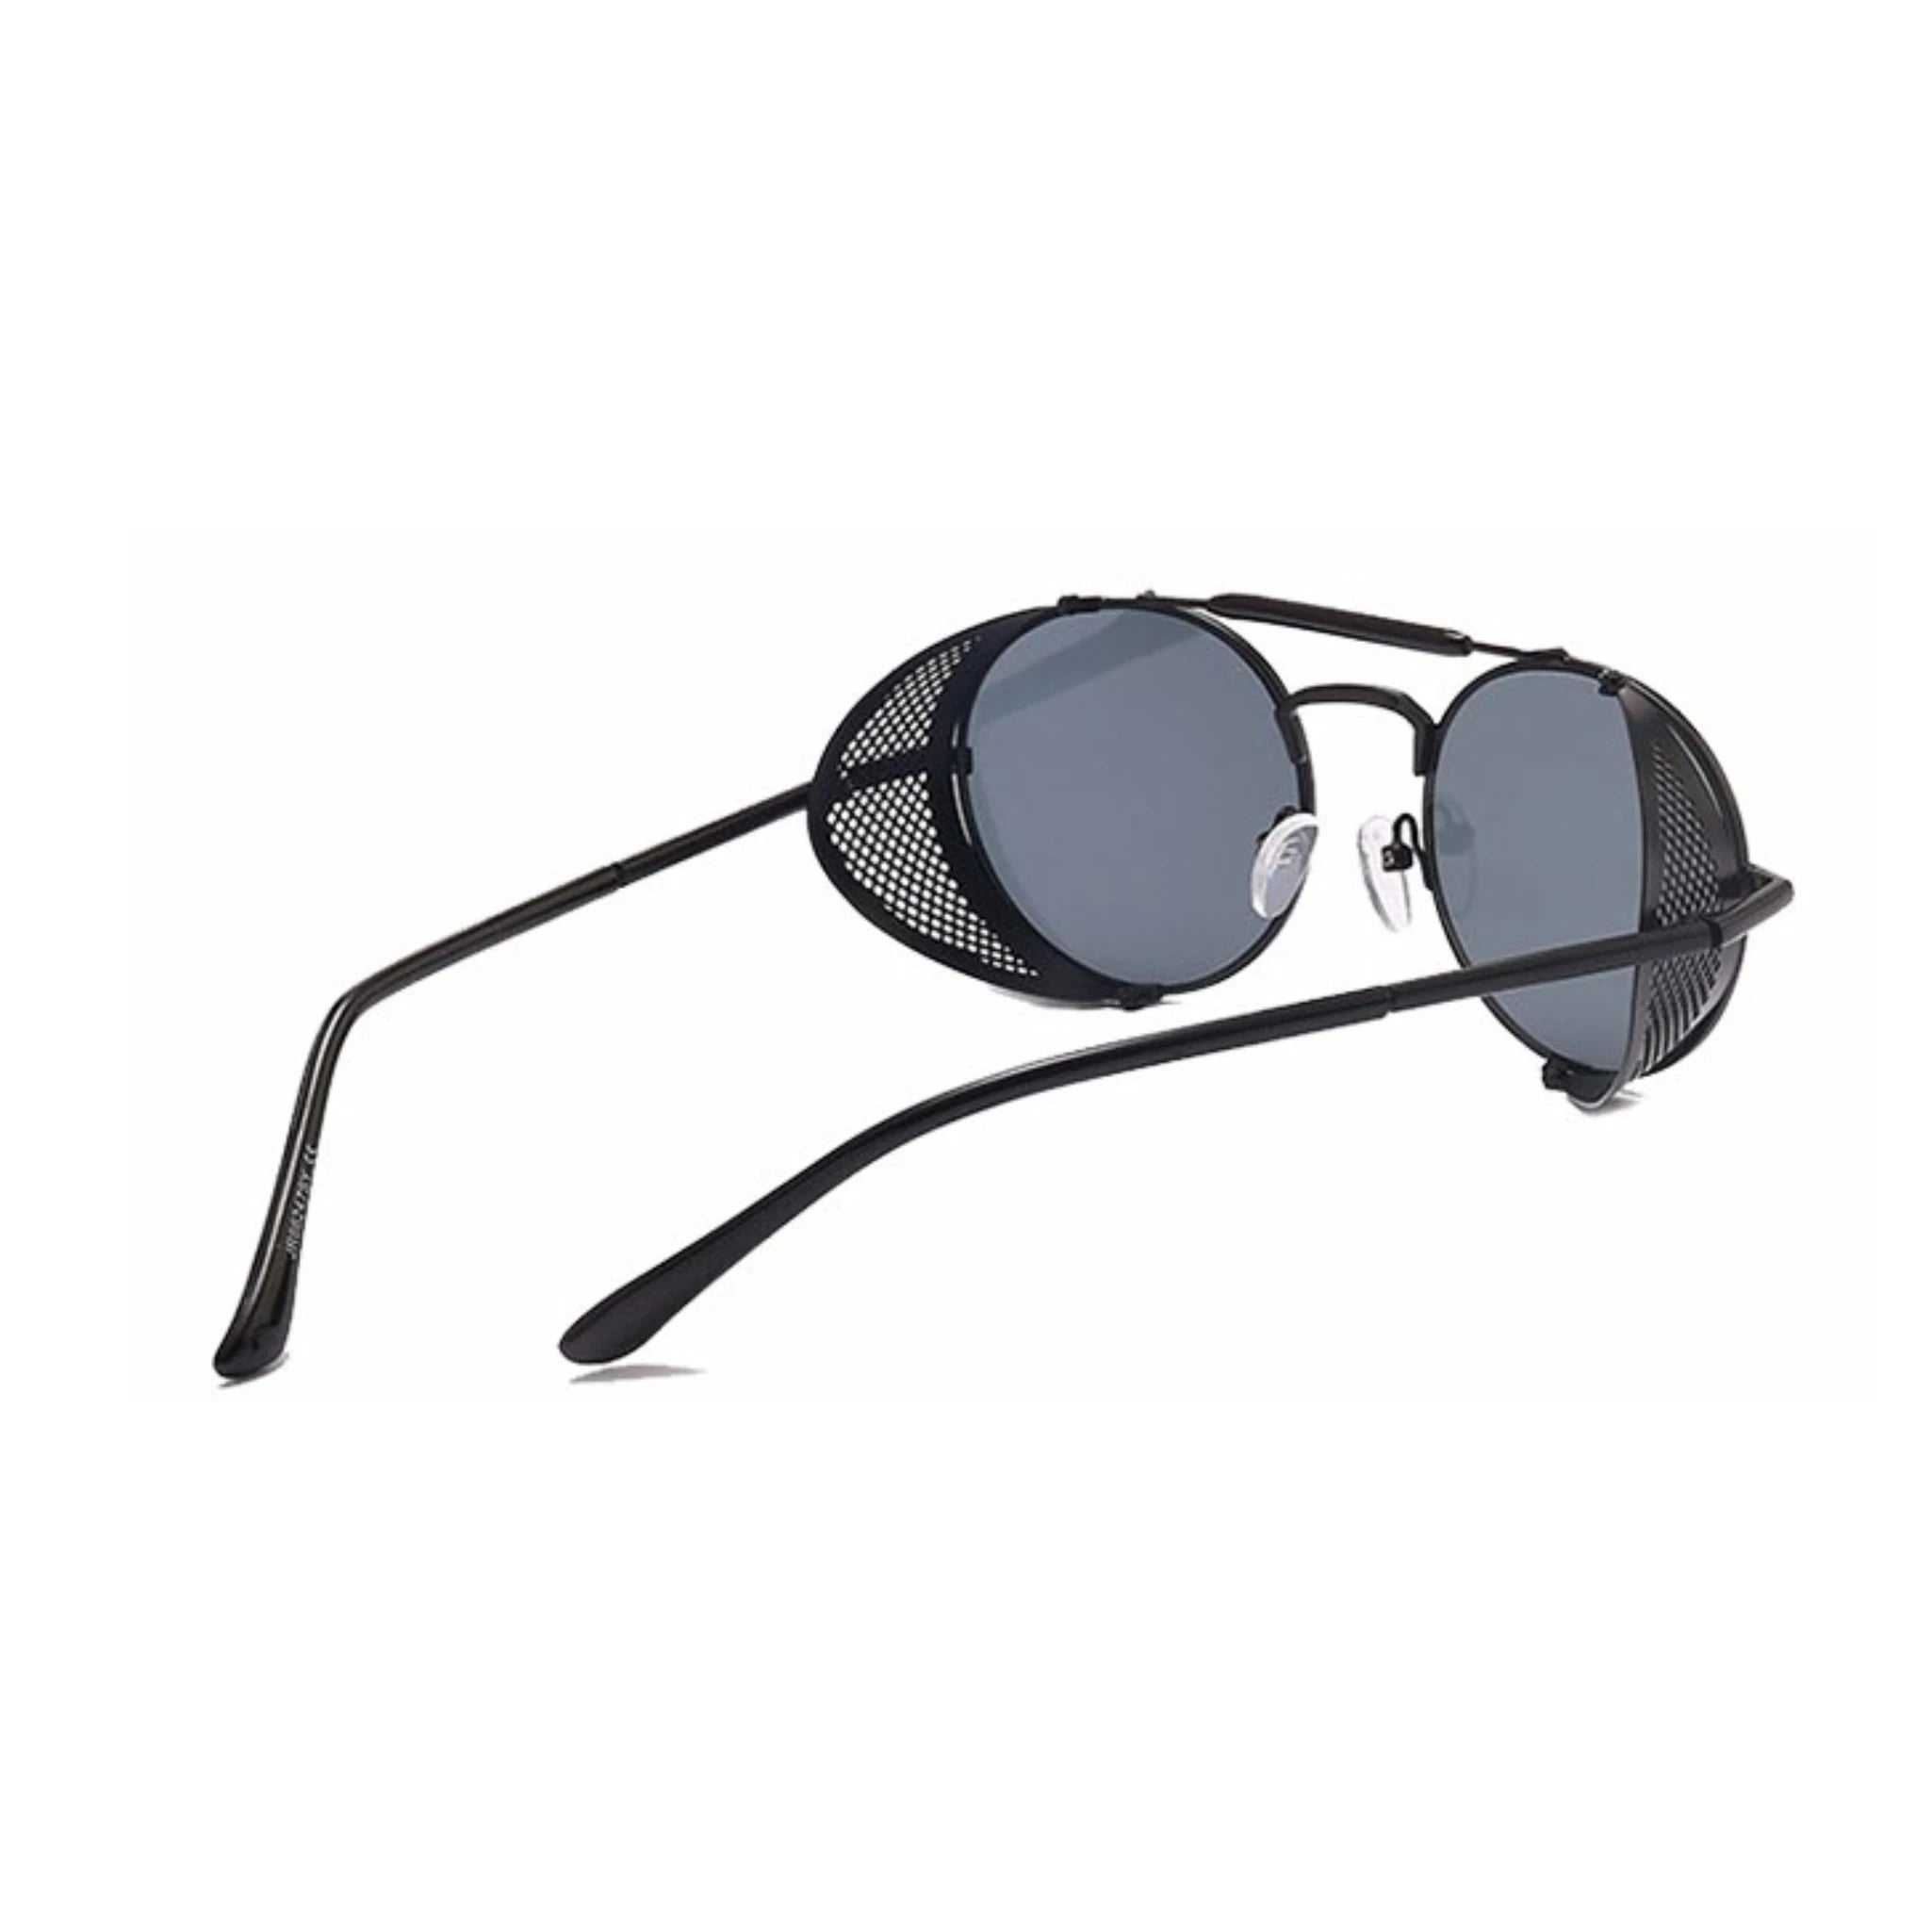 DISC Series Steampunk Side Shield Round Sunglasses - Black